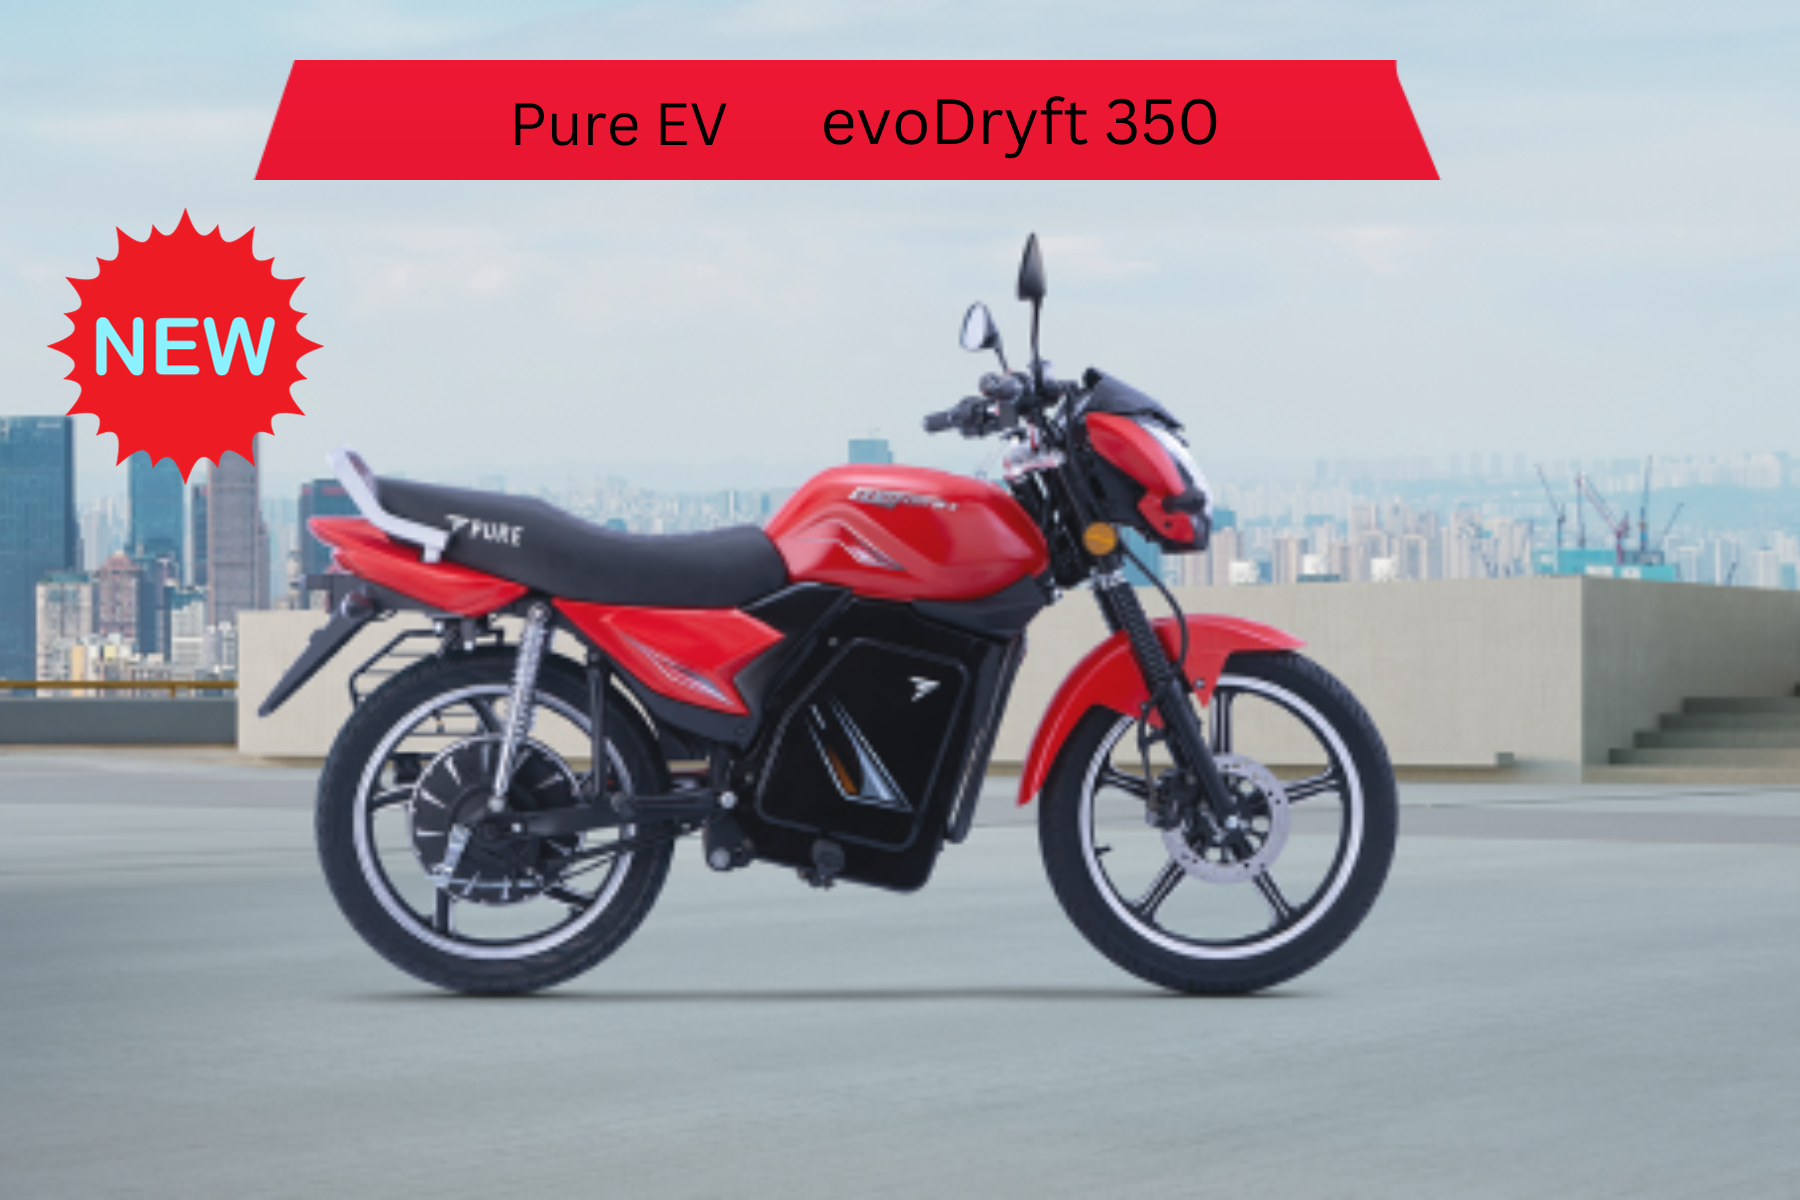 Pure EV evoDryft 350